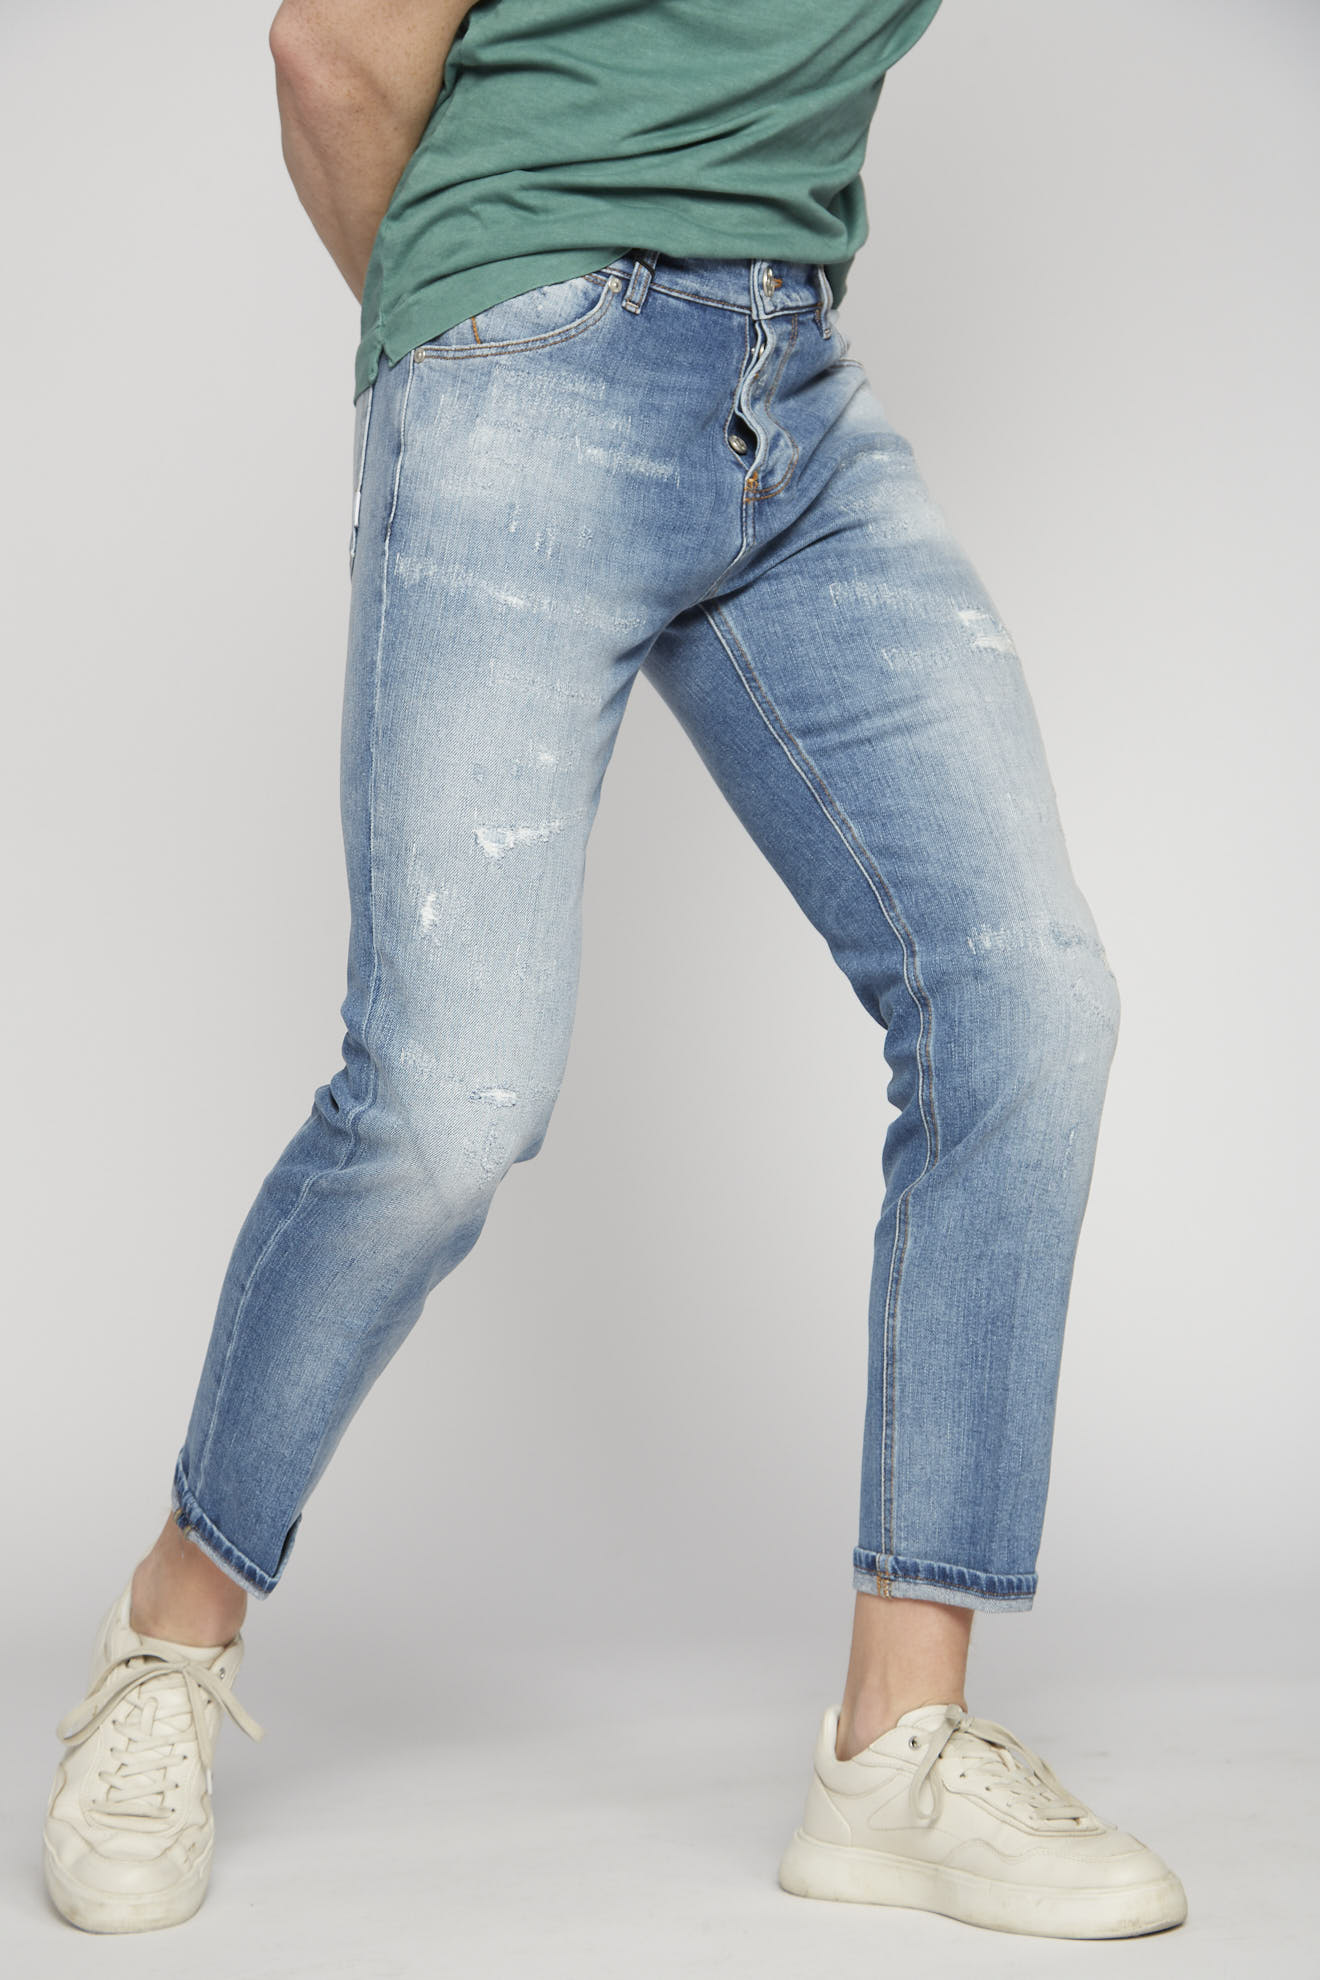 pt torino jeans denim destroyed cotton model frontansicht